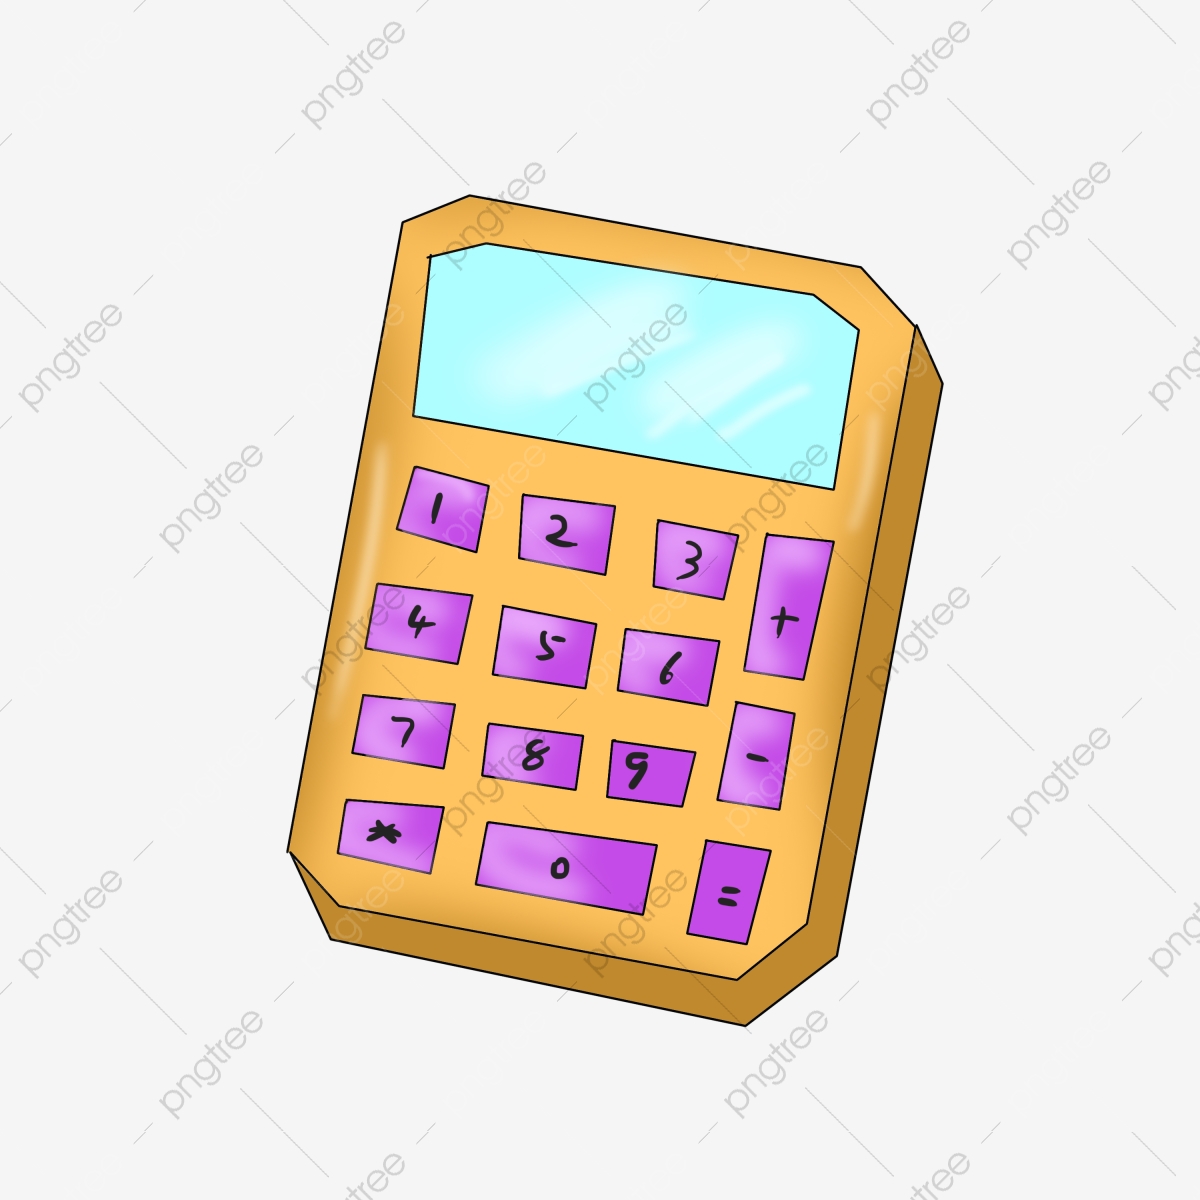 calculator clipart yellow